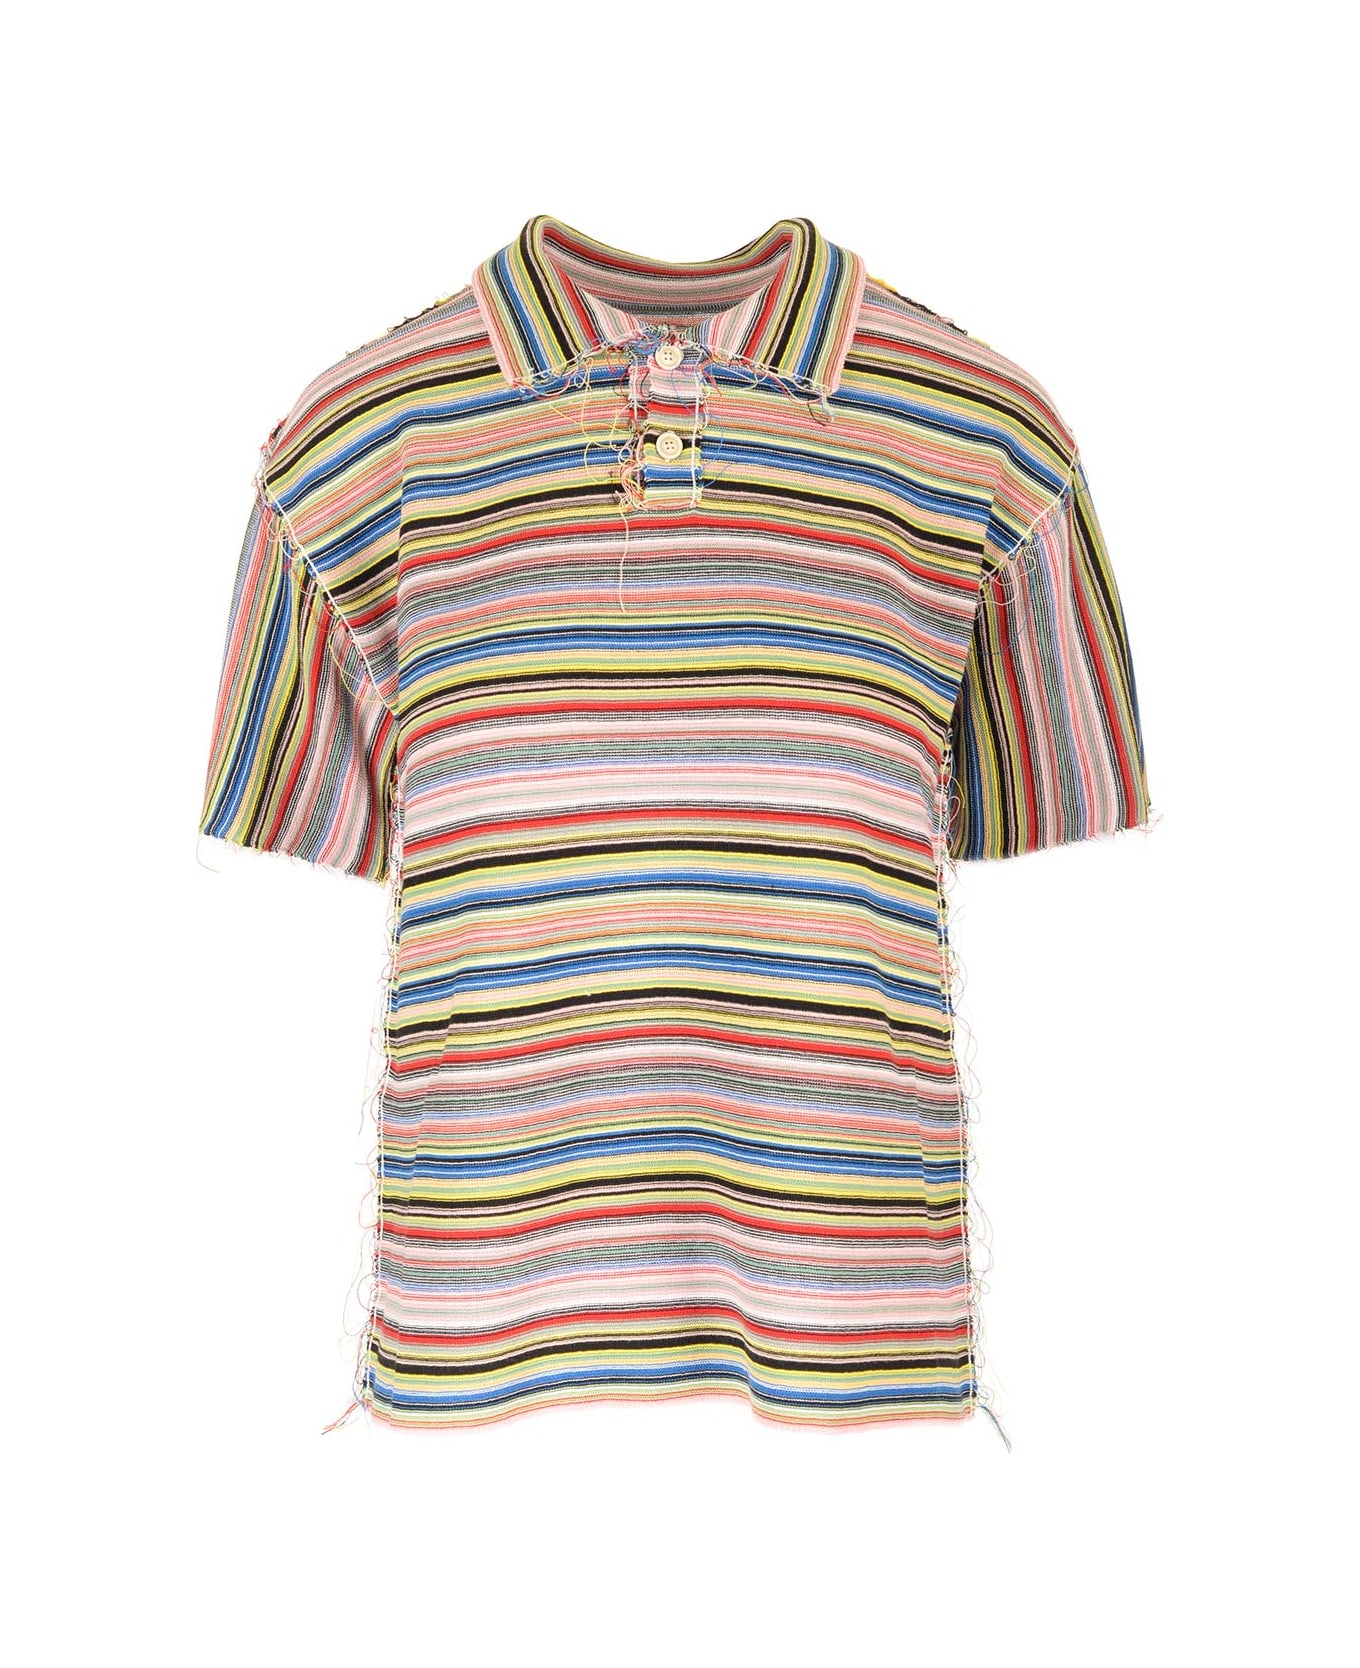 Maison Margiela Striped Jersey Polo Shirt - Stripes color mix ポロシャツ